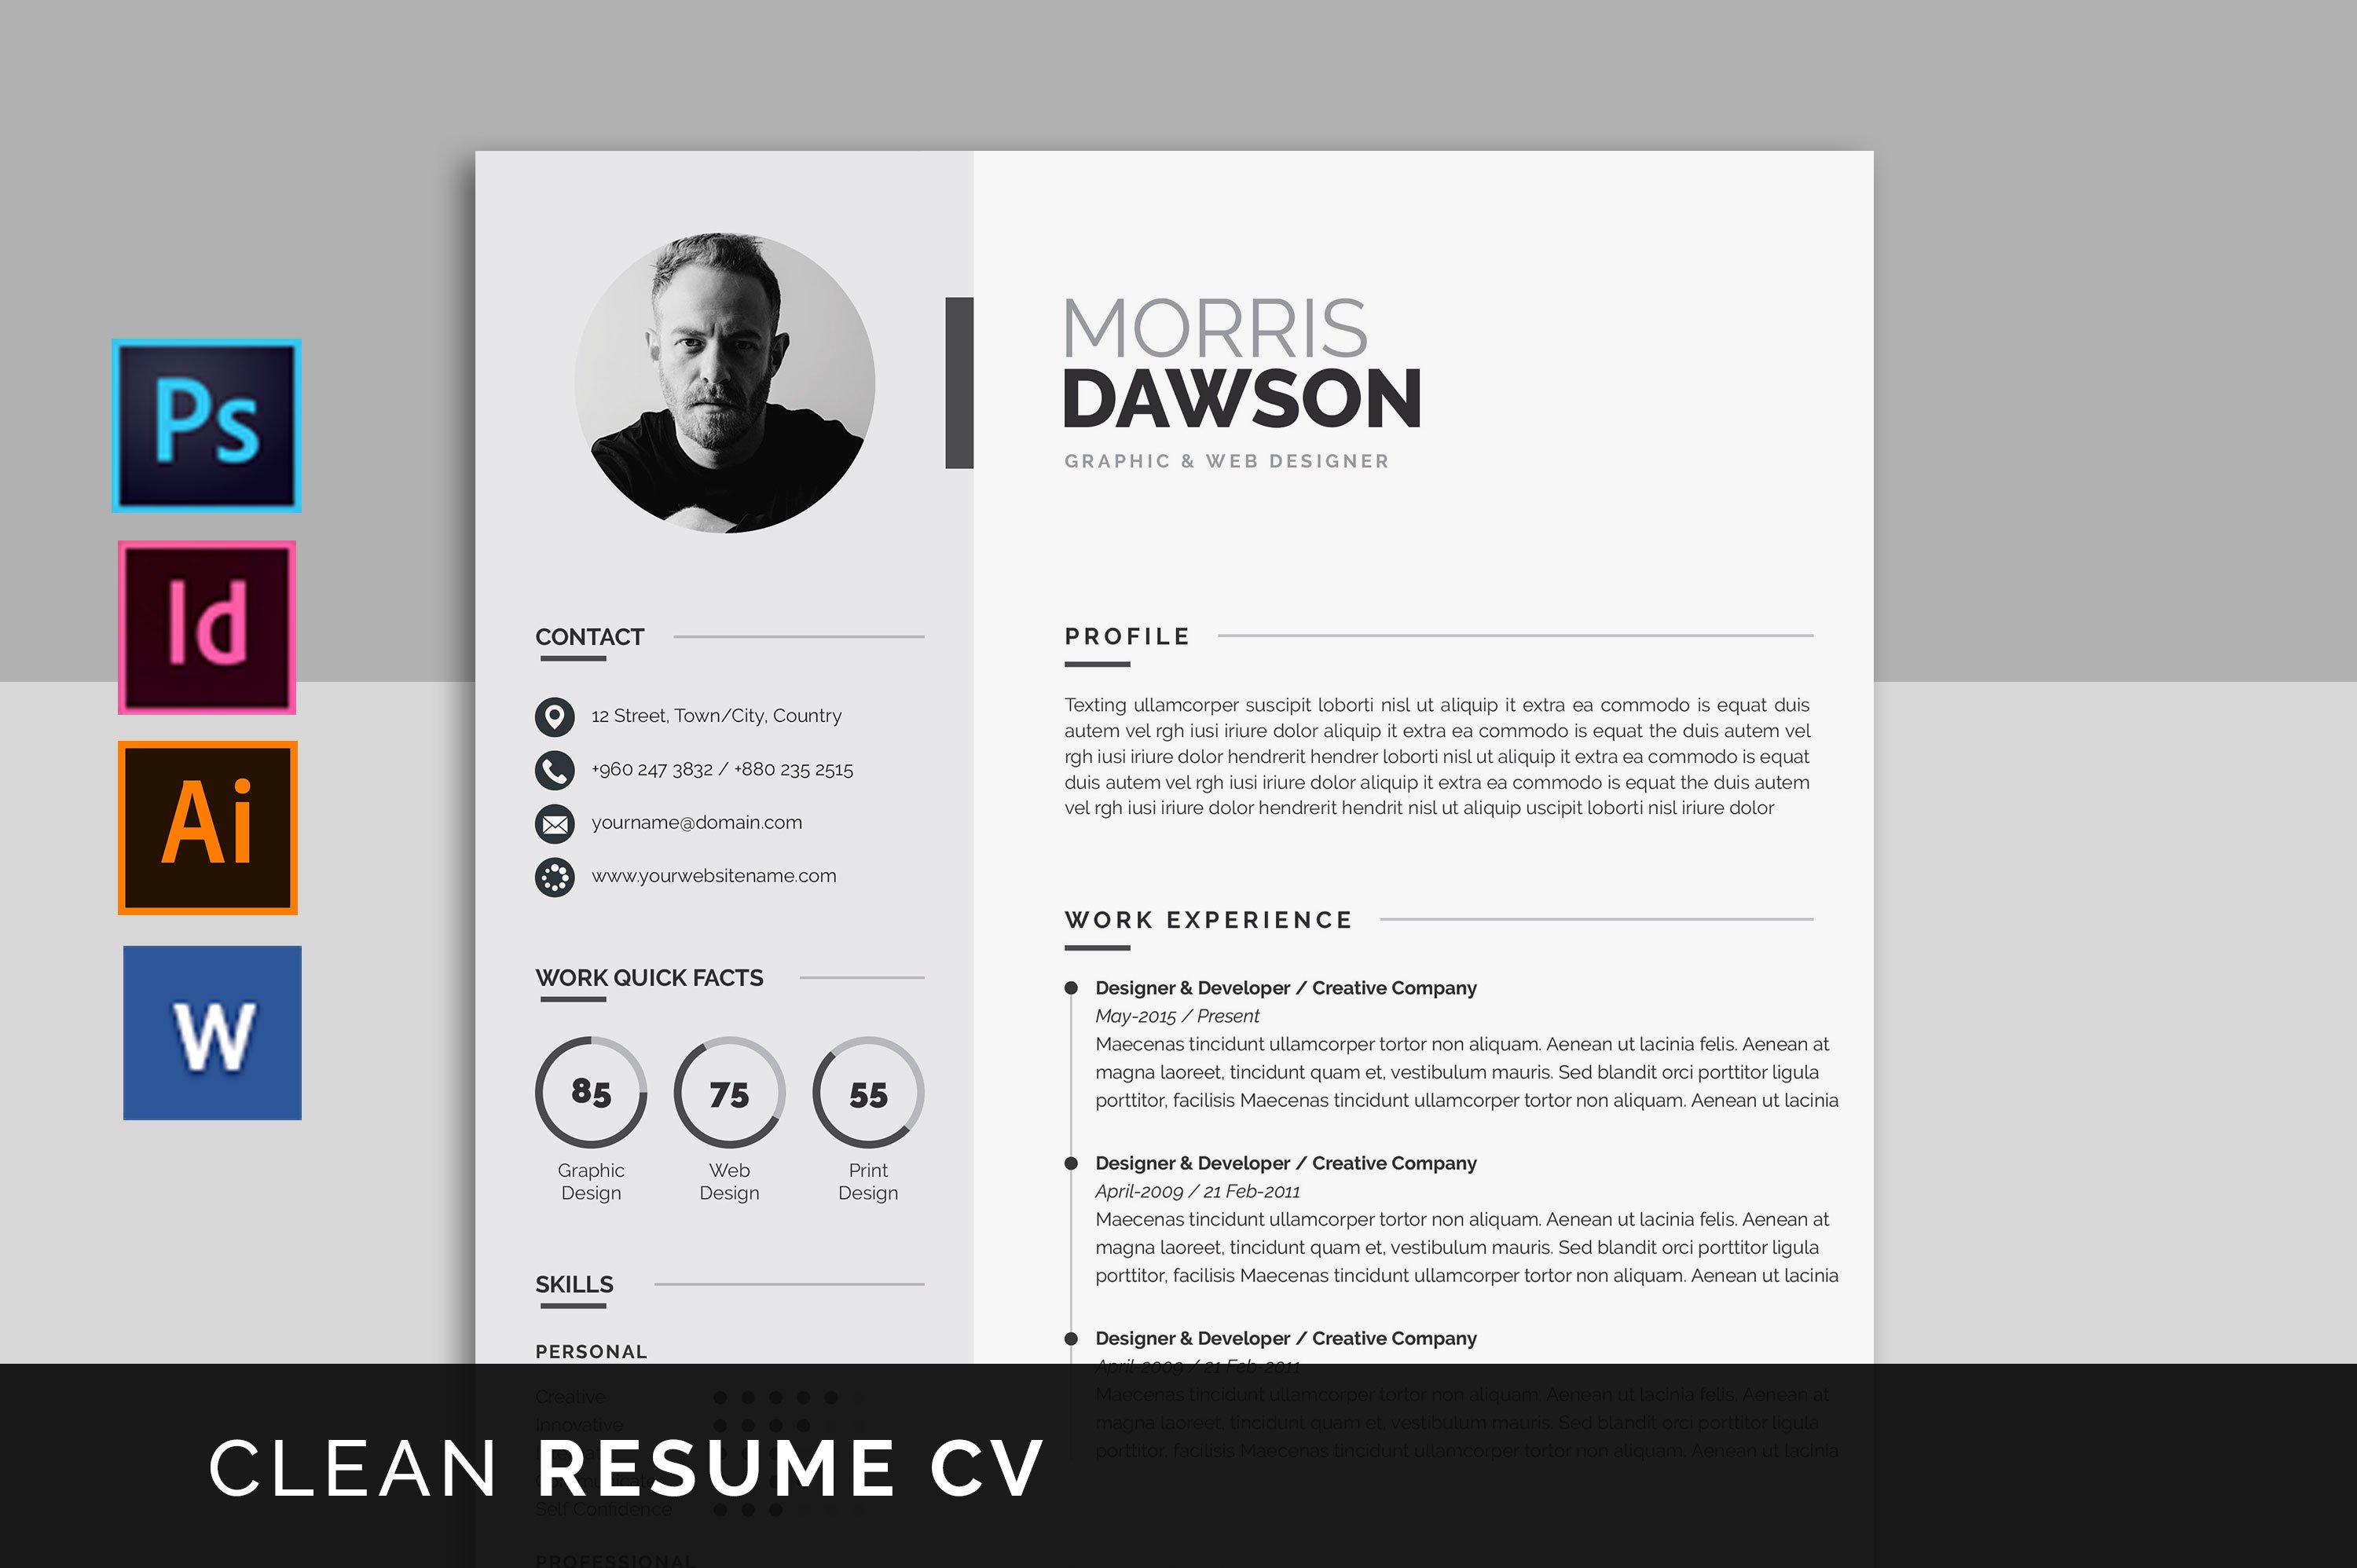 Resume/ CV cover image.